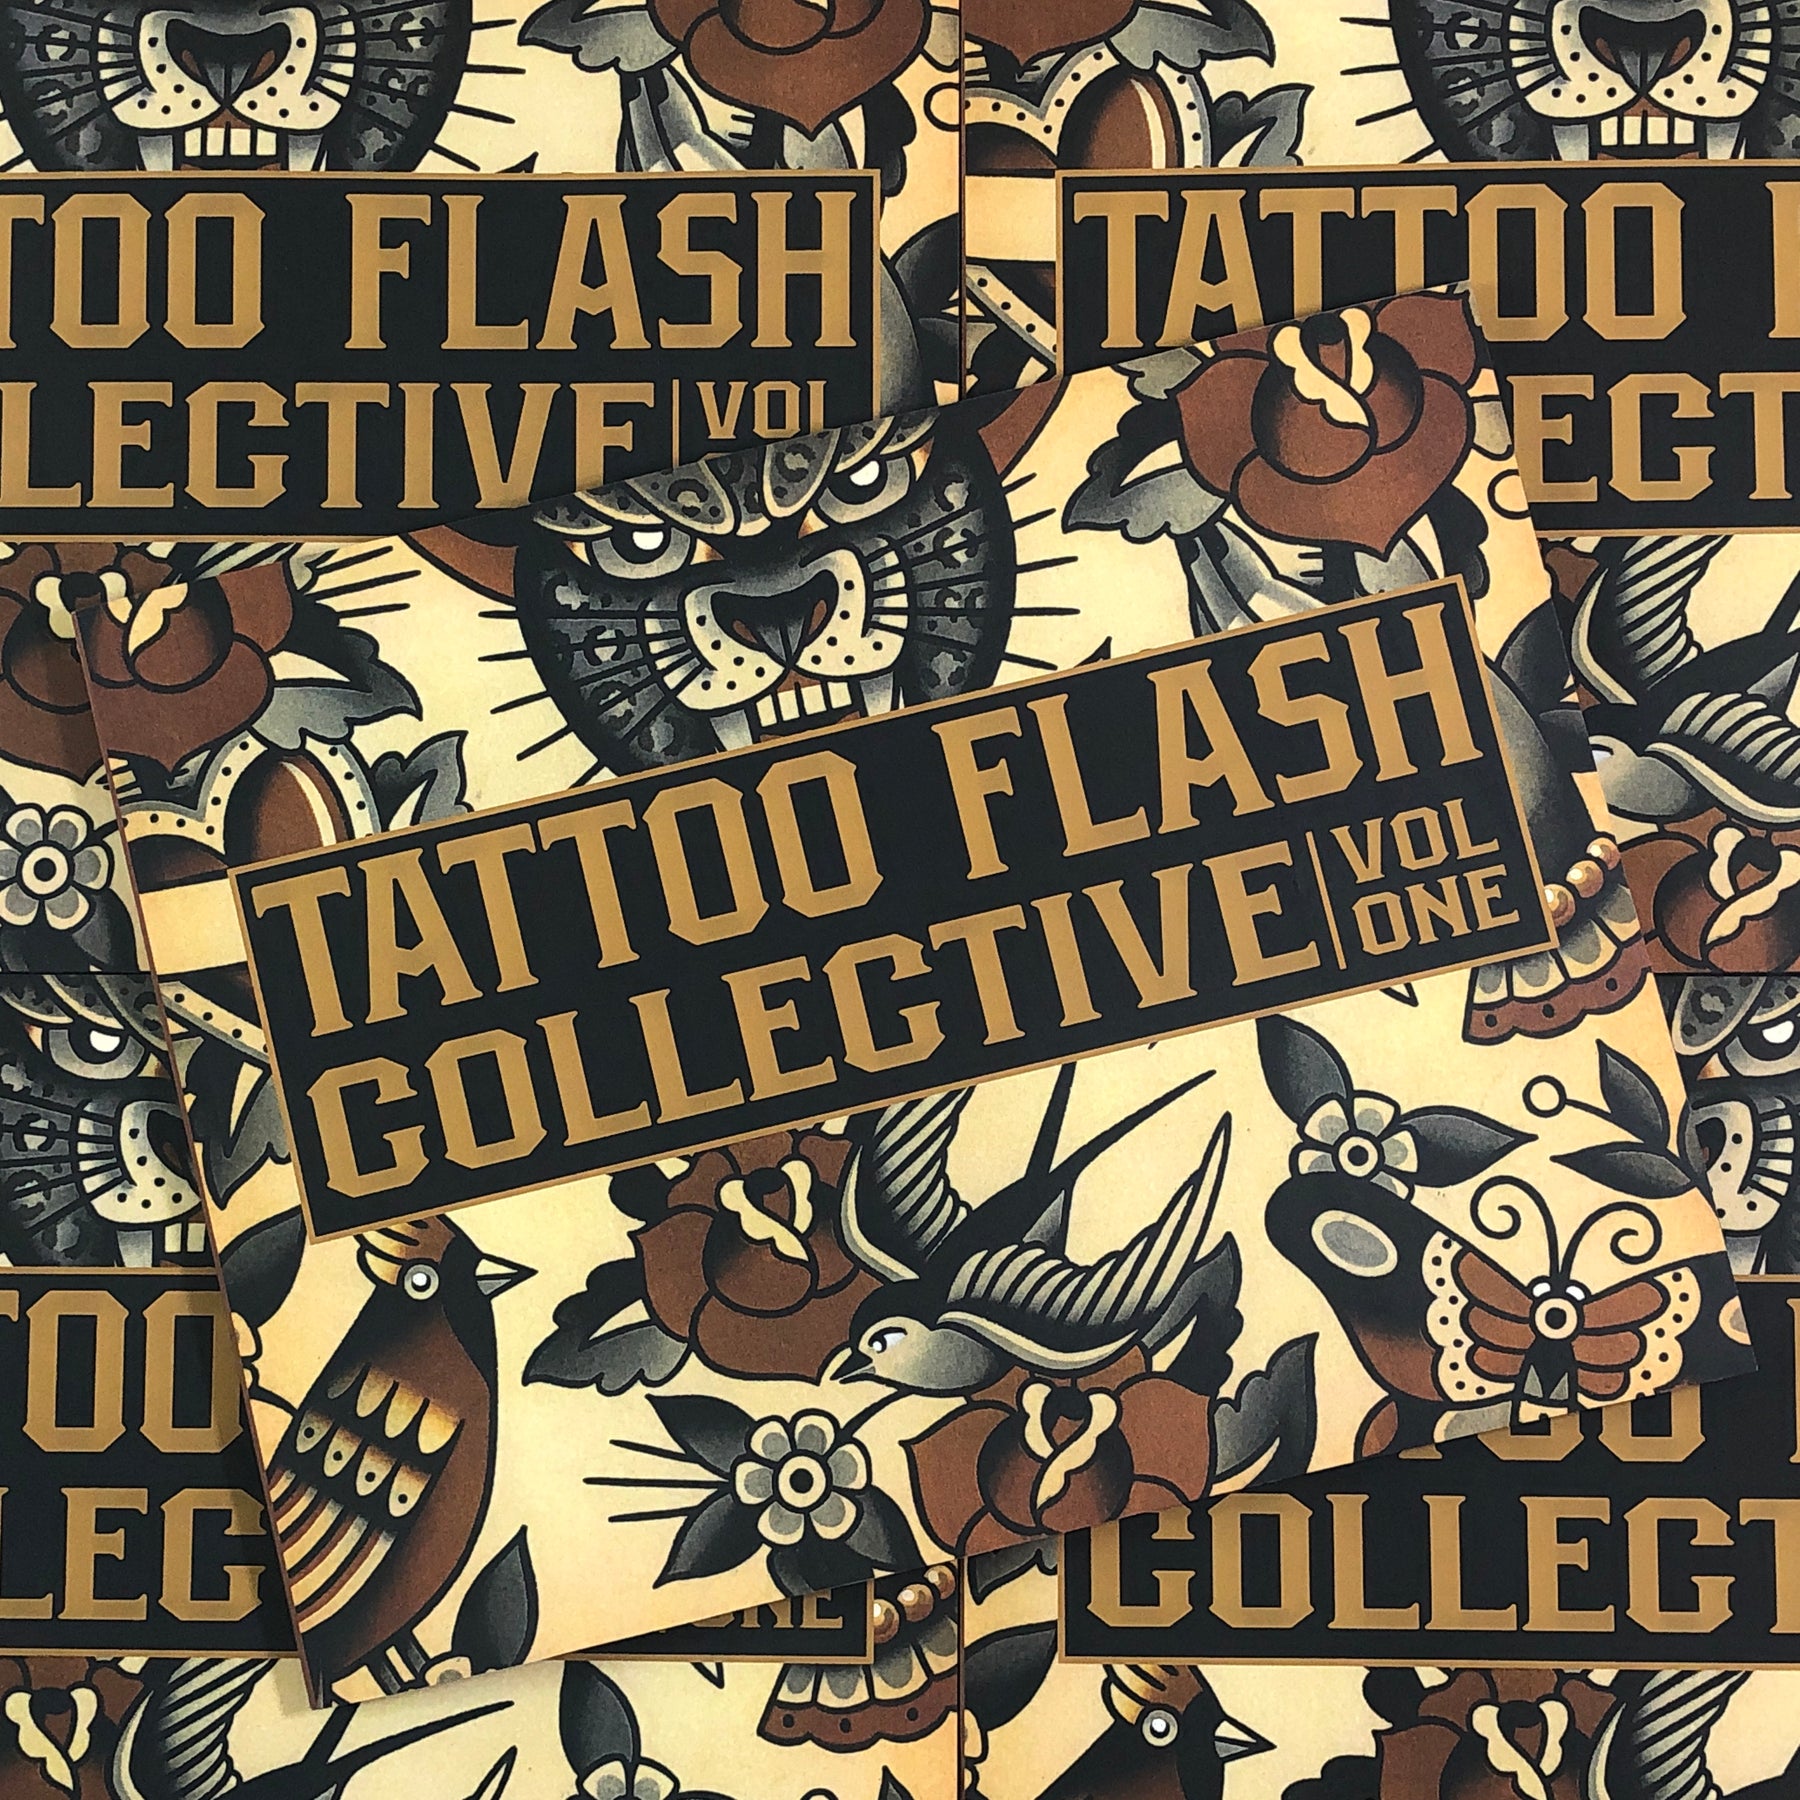 Tattoo Flash Collective Vol.1 on Vimeo